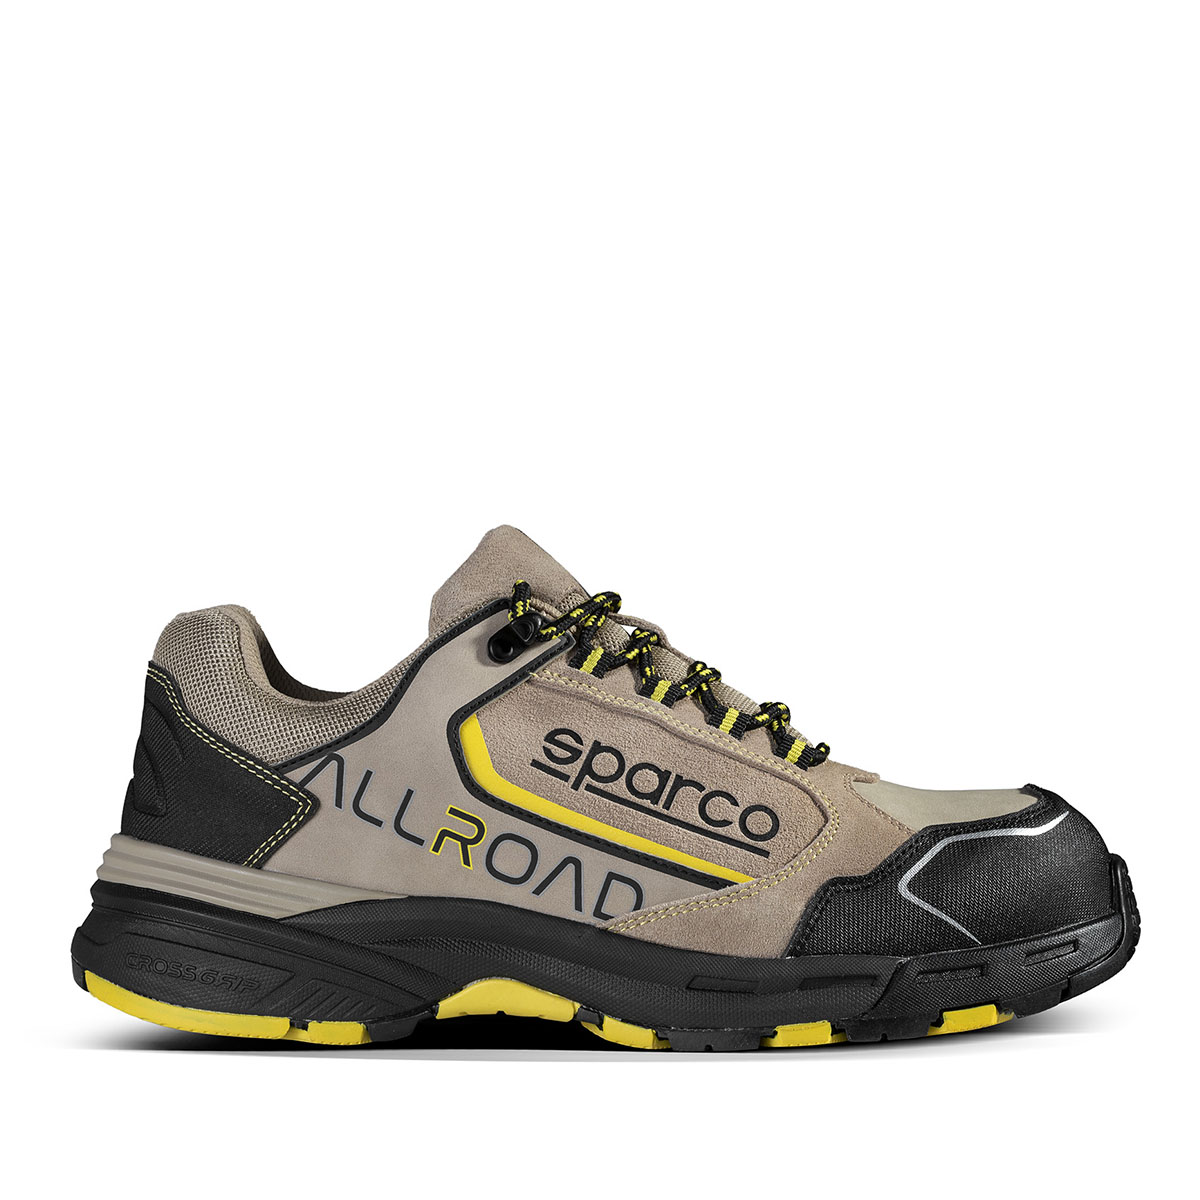 Zapato de seguridad Allroad todoterreno S3 Sparco ® •